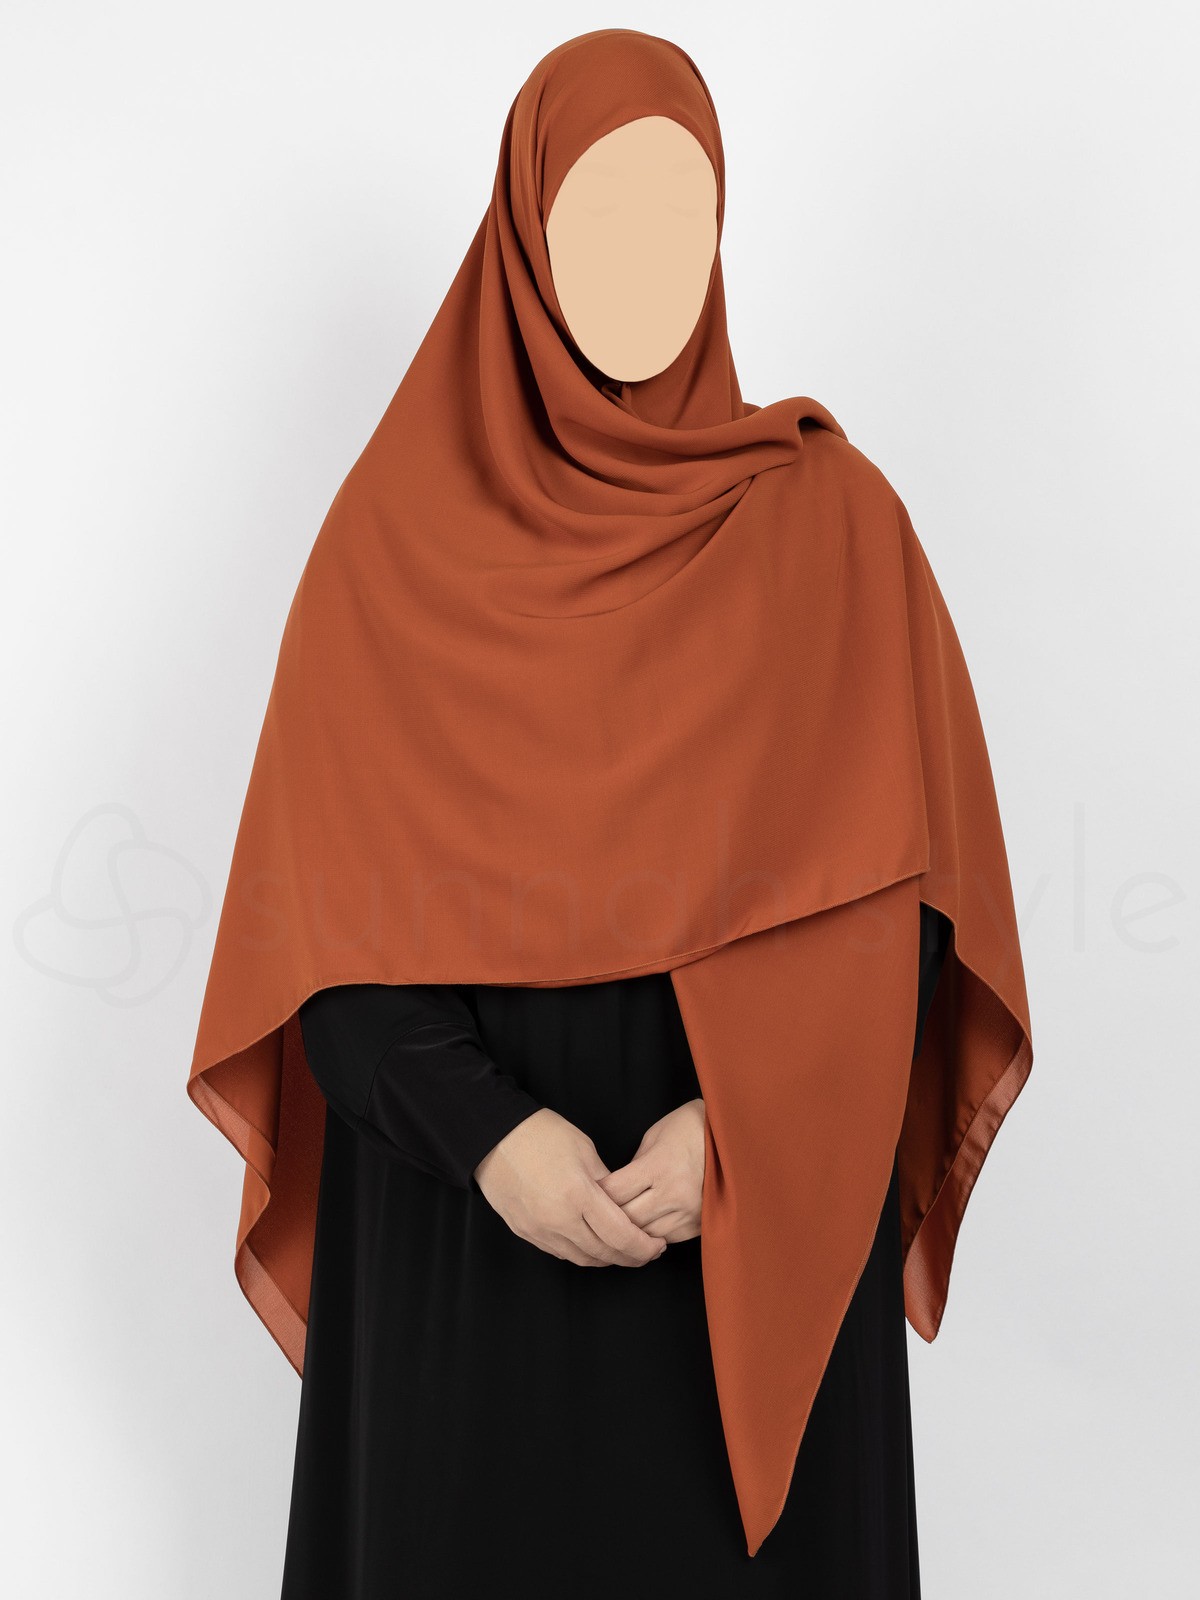 Sunnah Style - Essentials Square Hijab - XL (Lavender)